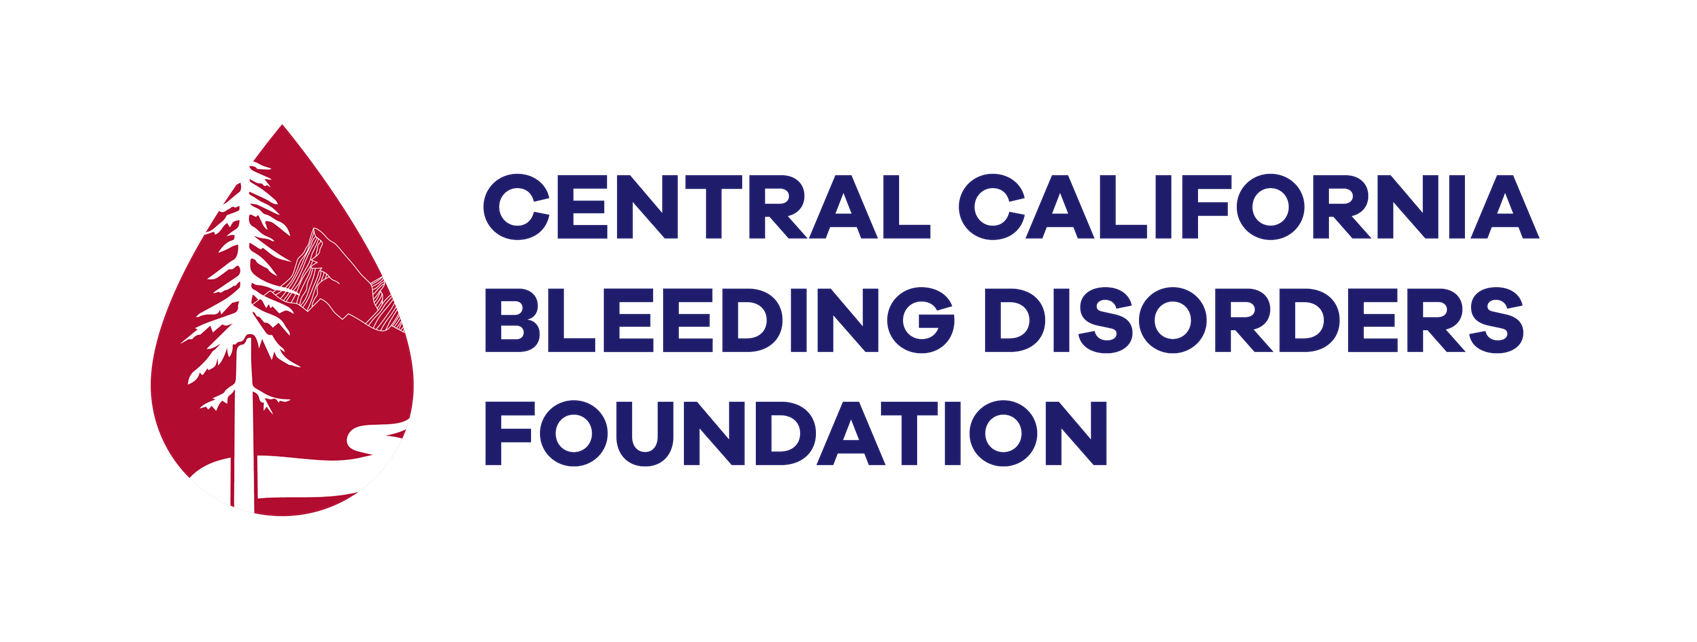 Central California Bleeding Disorders Foundation